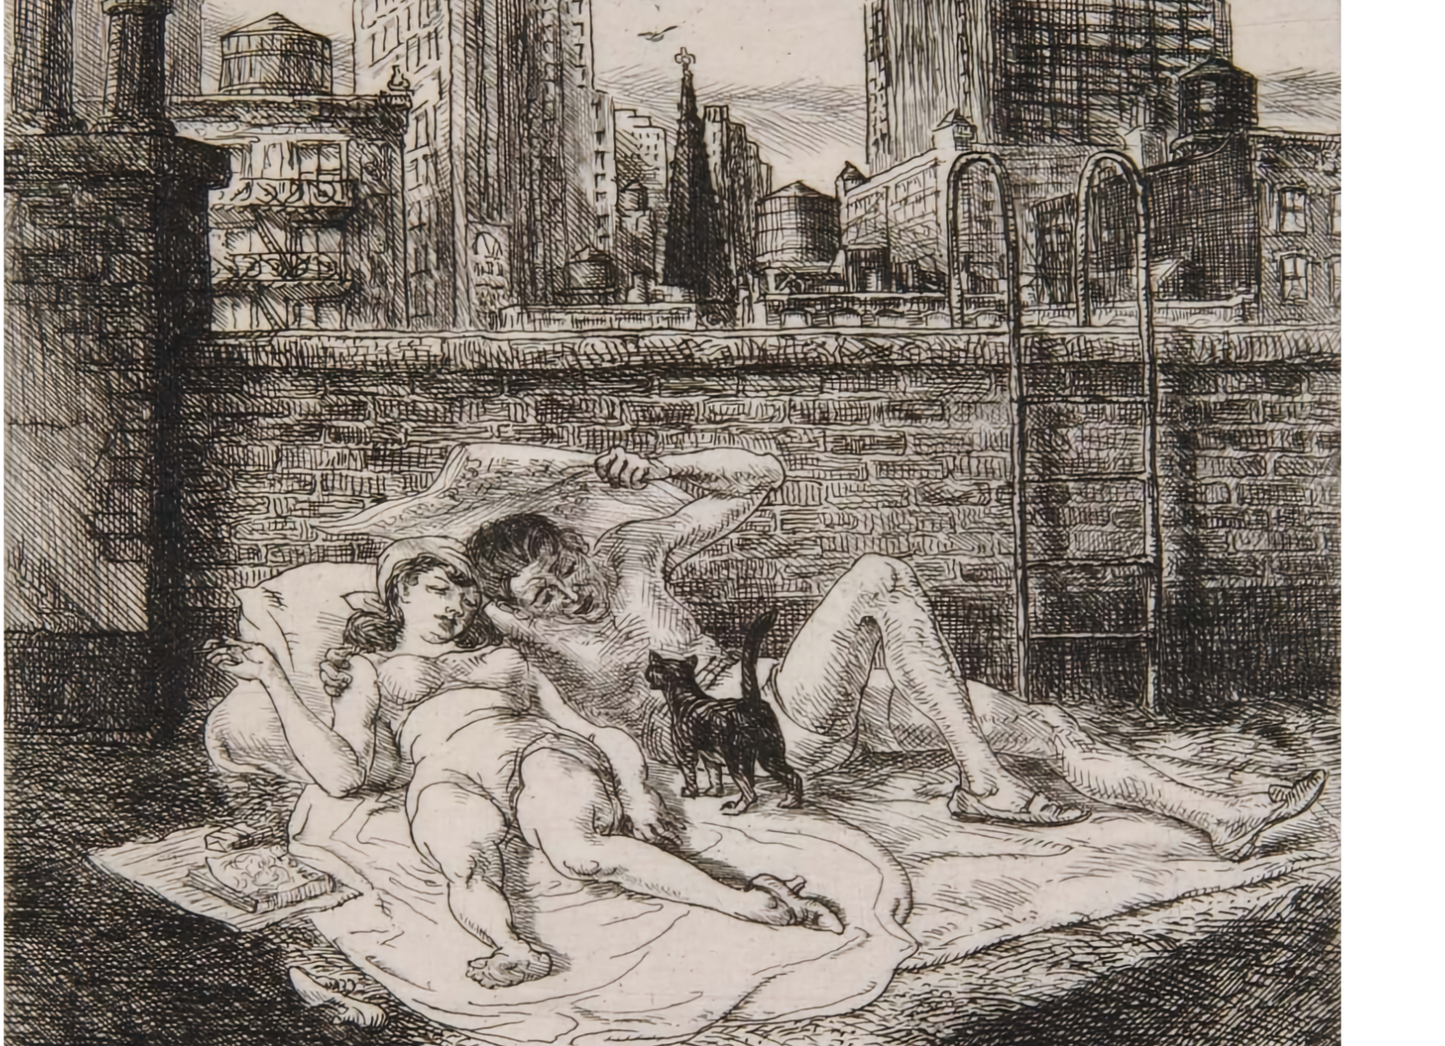 Sunbathers on the Roof by John Sloan, 1941 - Postcard